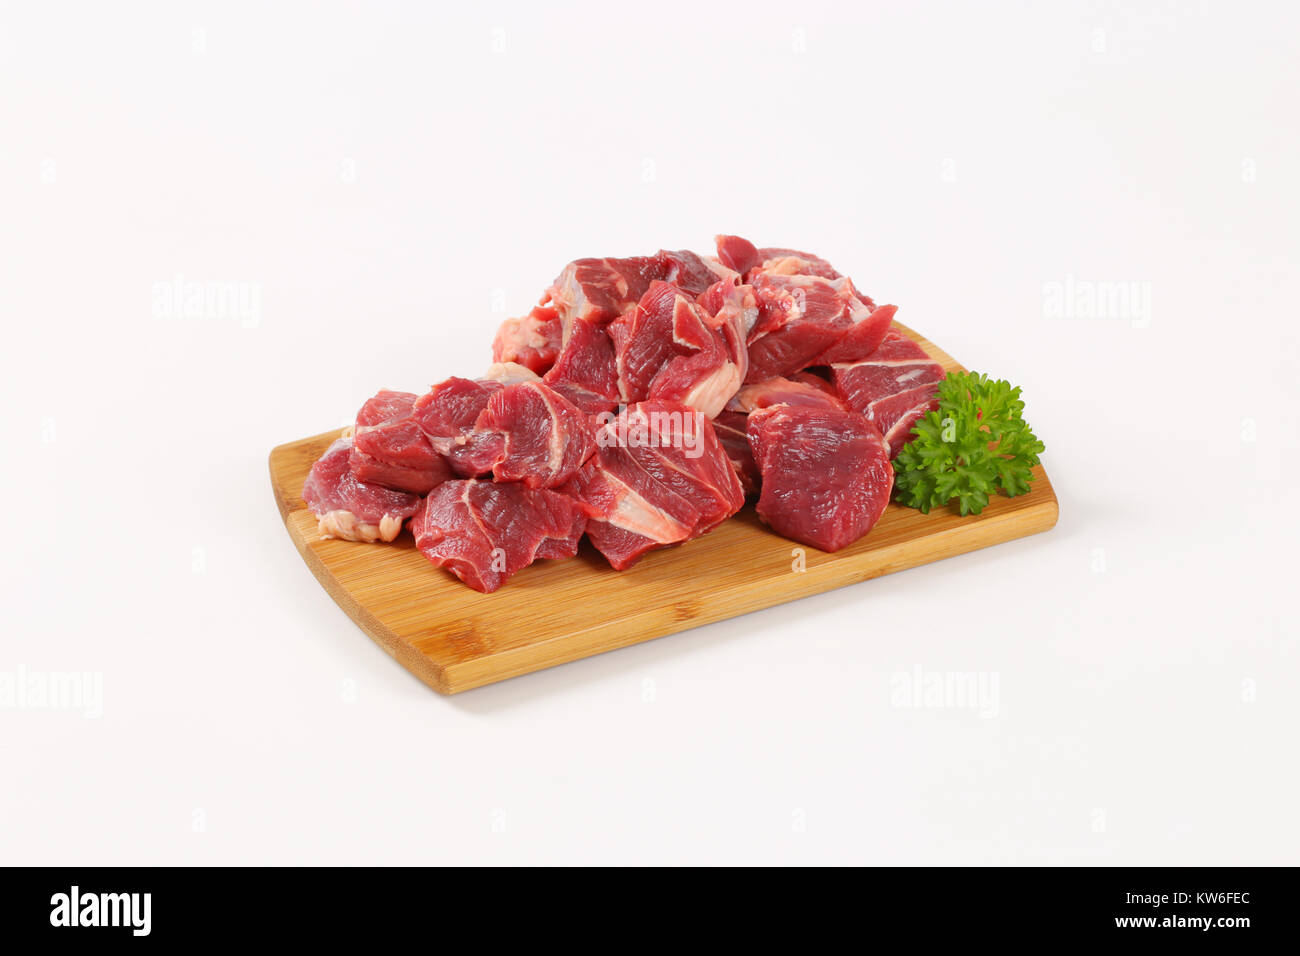 https://c8.alamy.com/comp/KW6FEC/diced-raw-beef-meat-on-wooden-cutting-board-KW6FEC.jpg